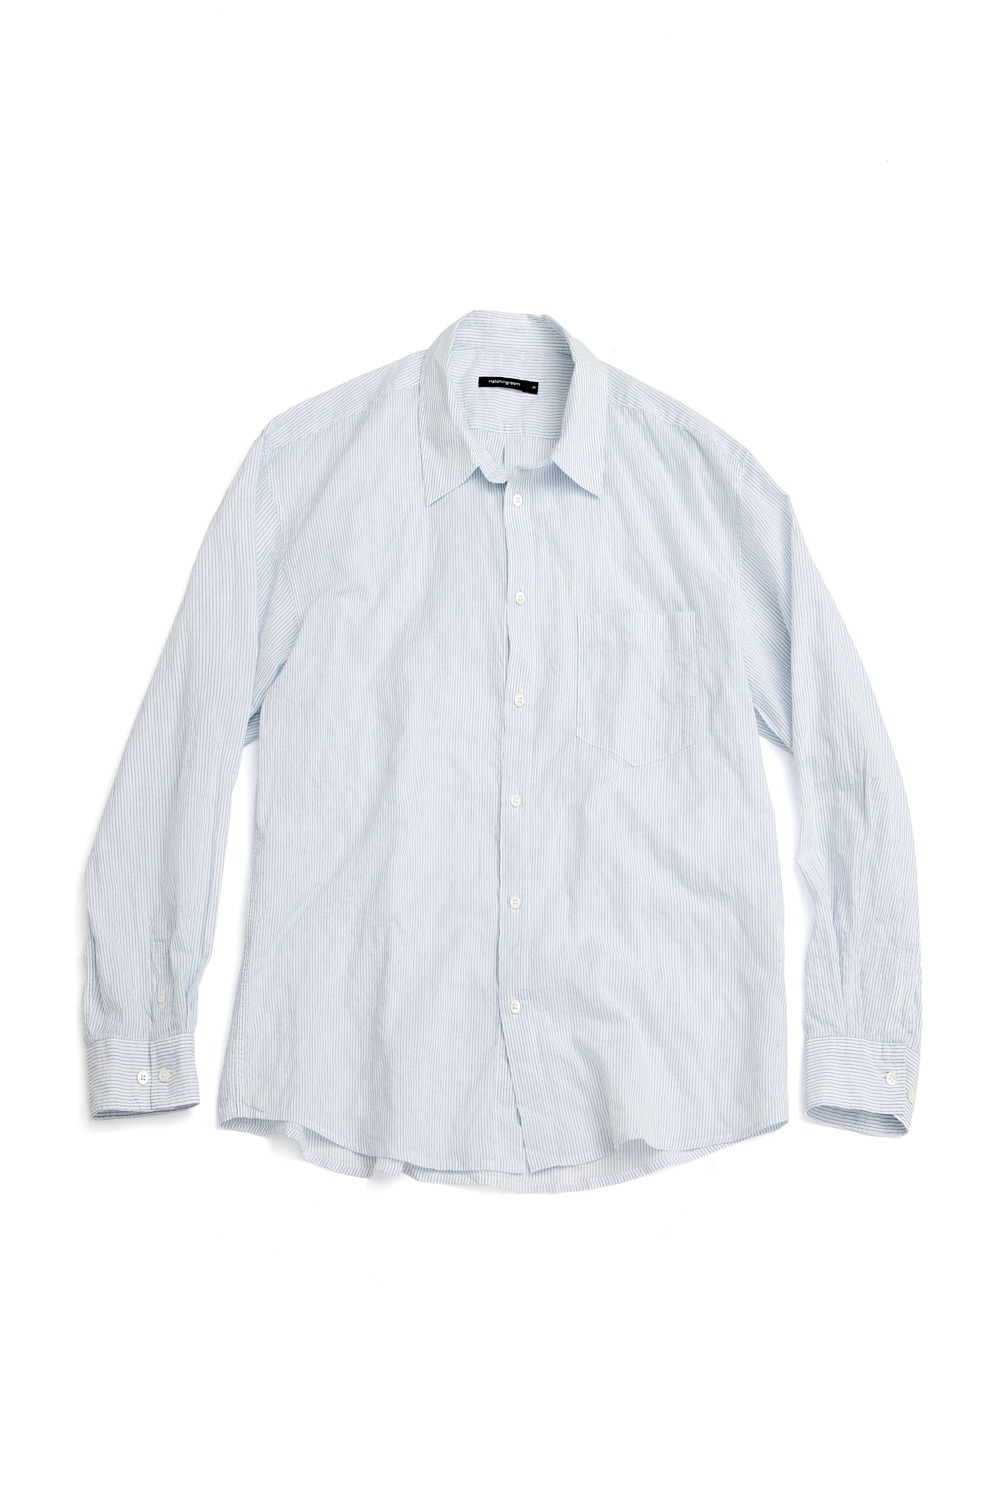 Classic Shirt Crinkle Stripe White/Blue